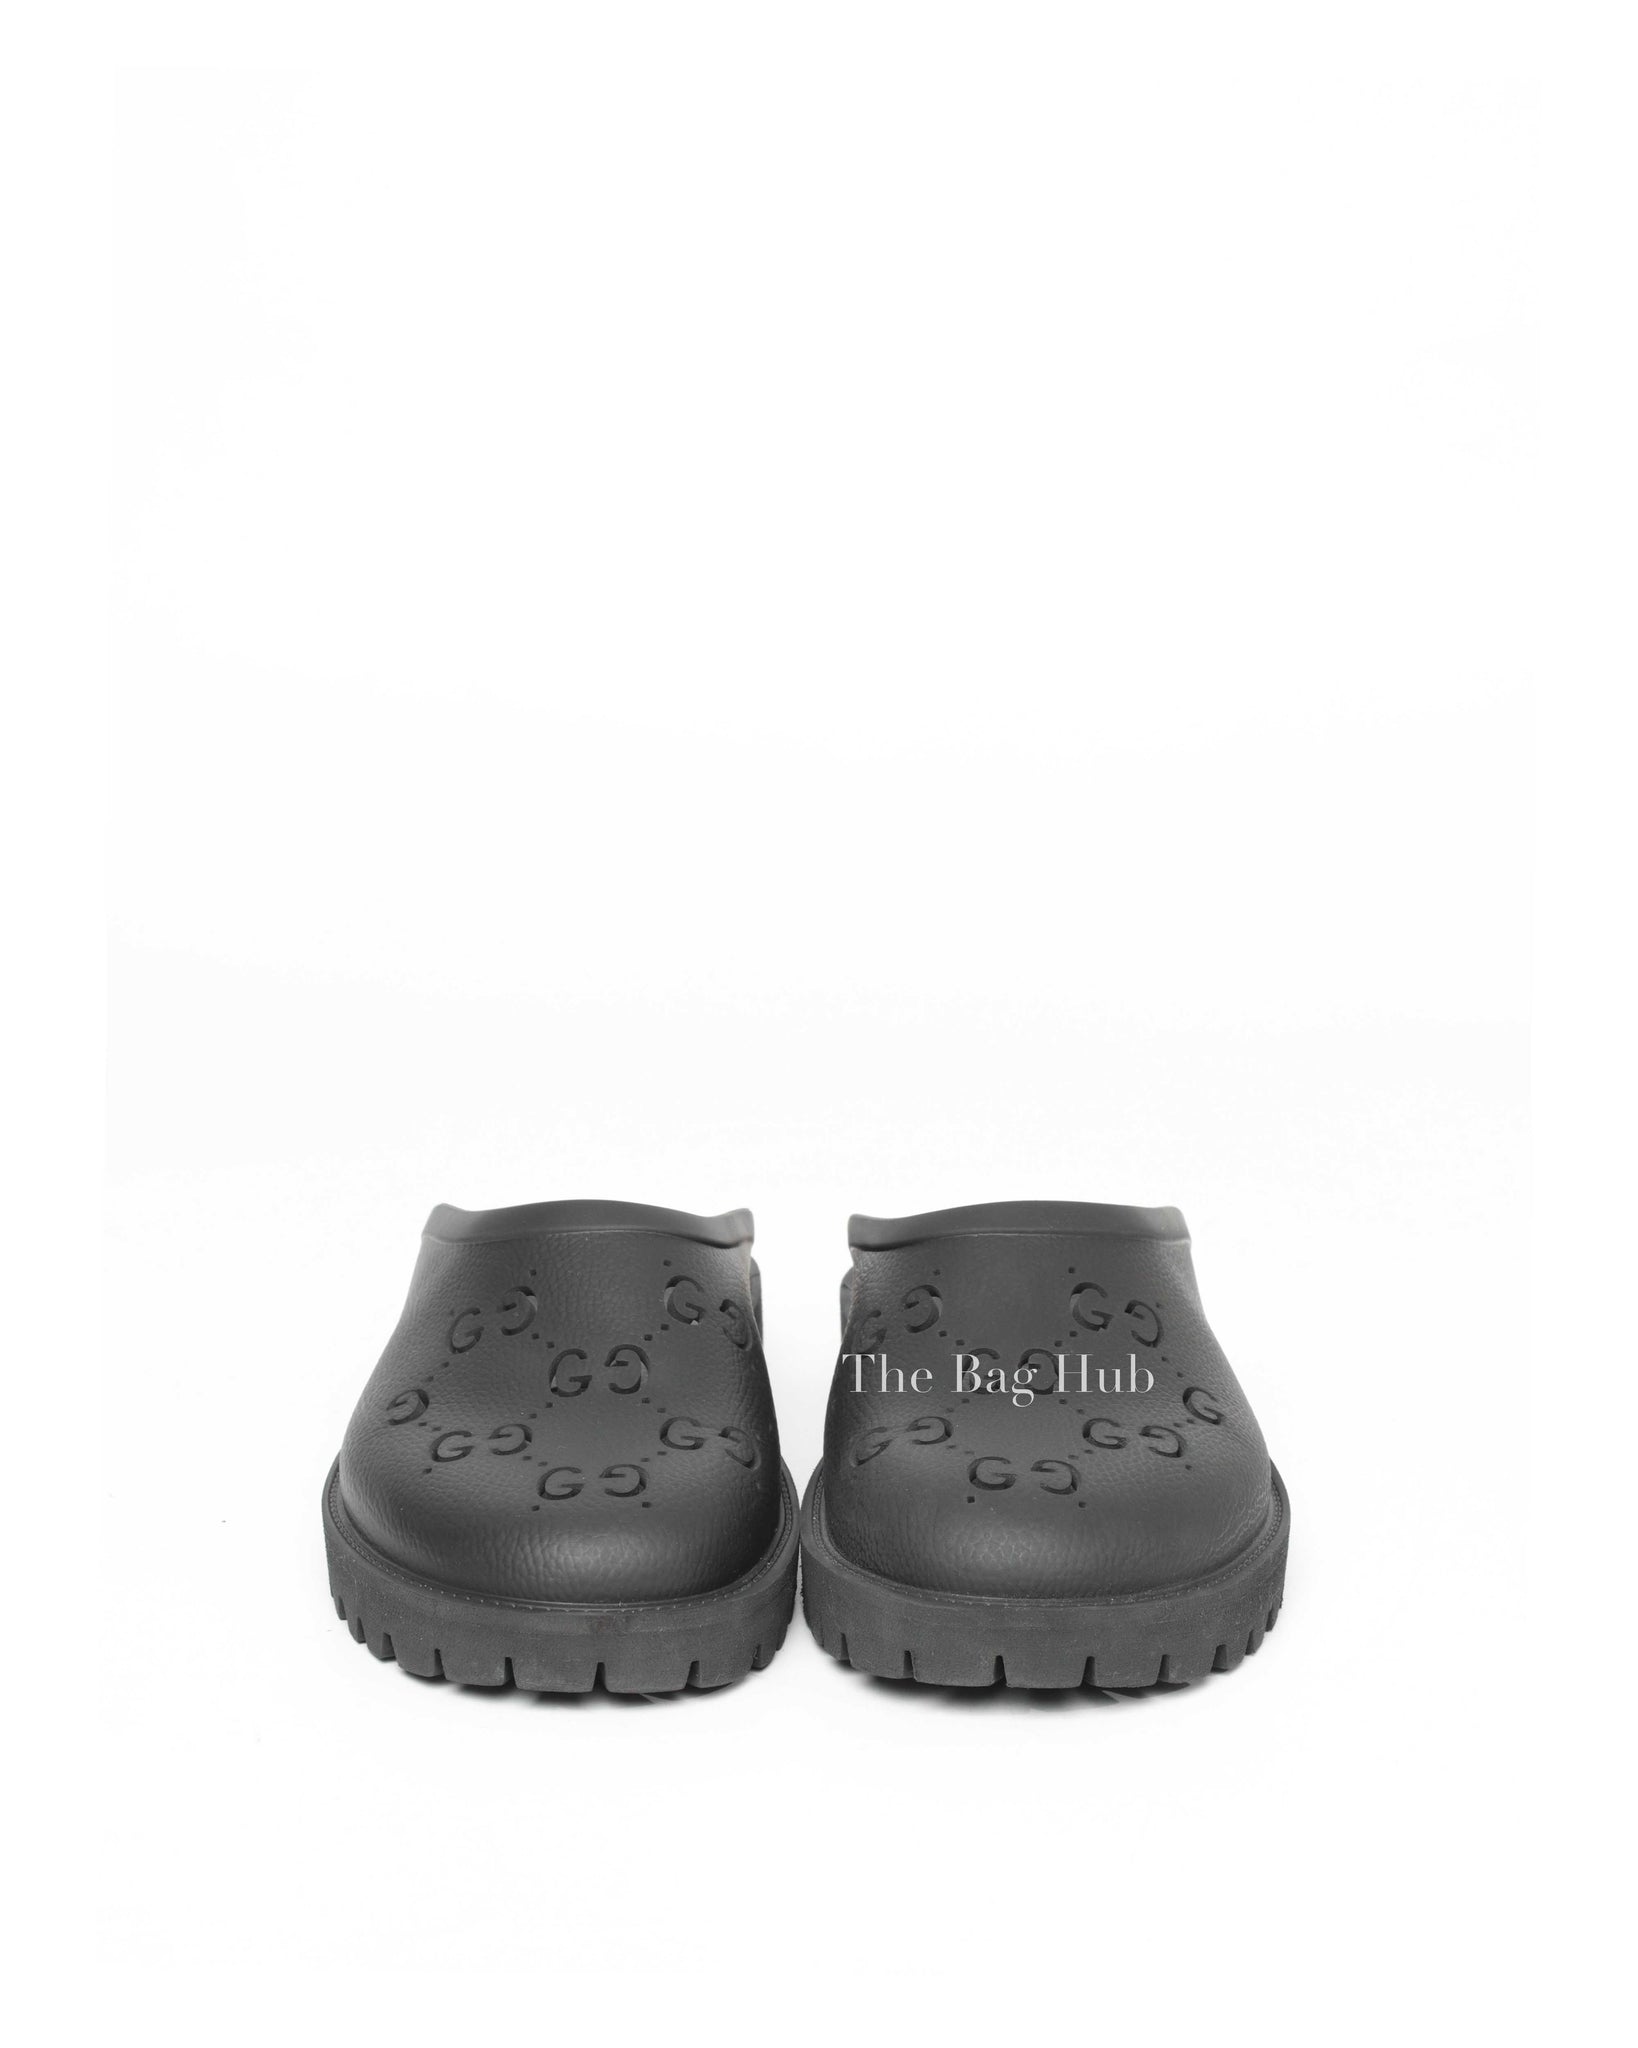 Gucci Black Rubber Men's Slip On Sandals Size 9-3